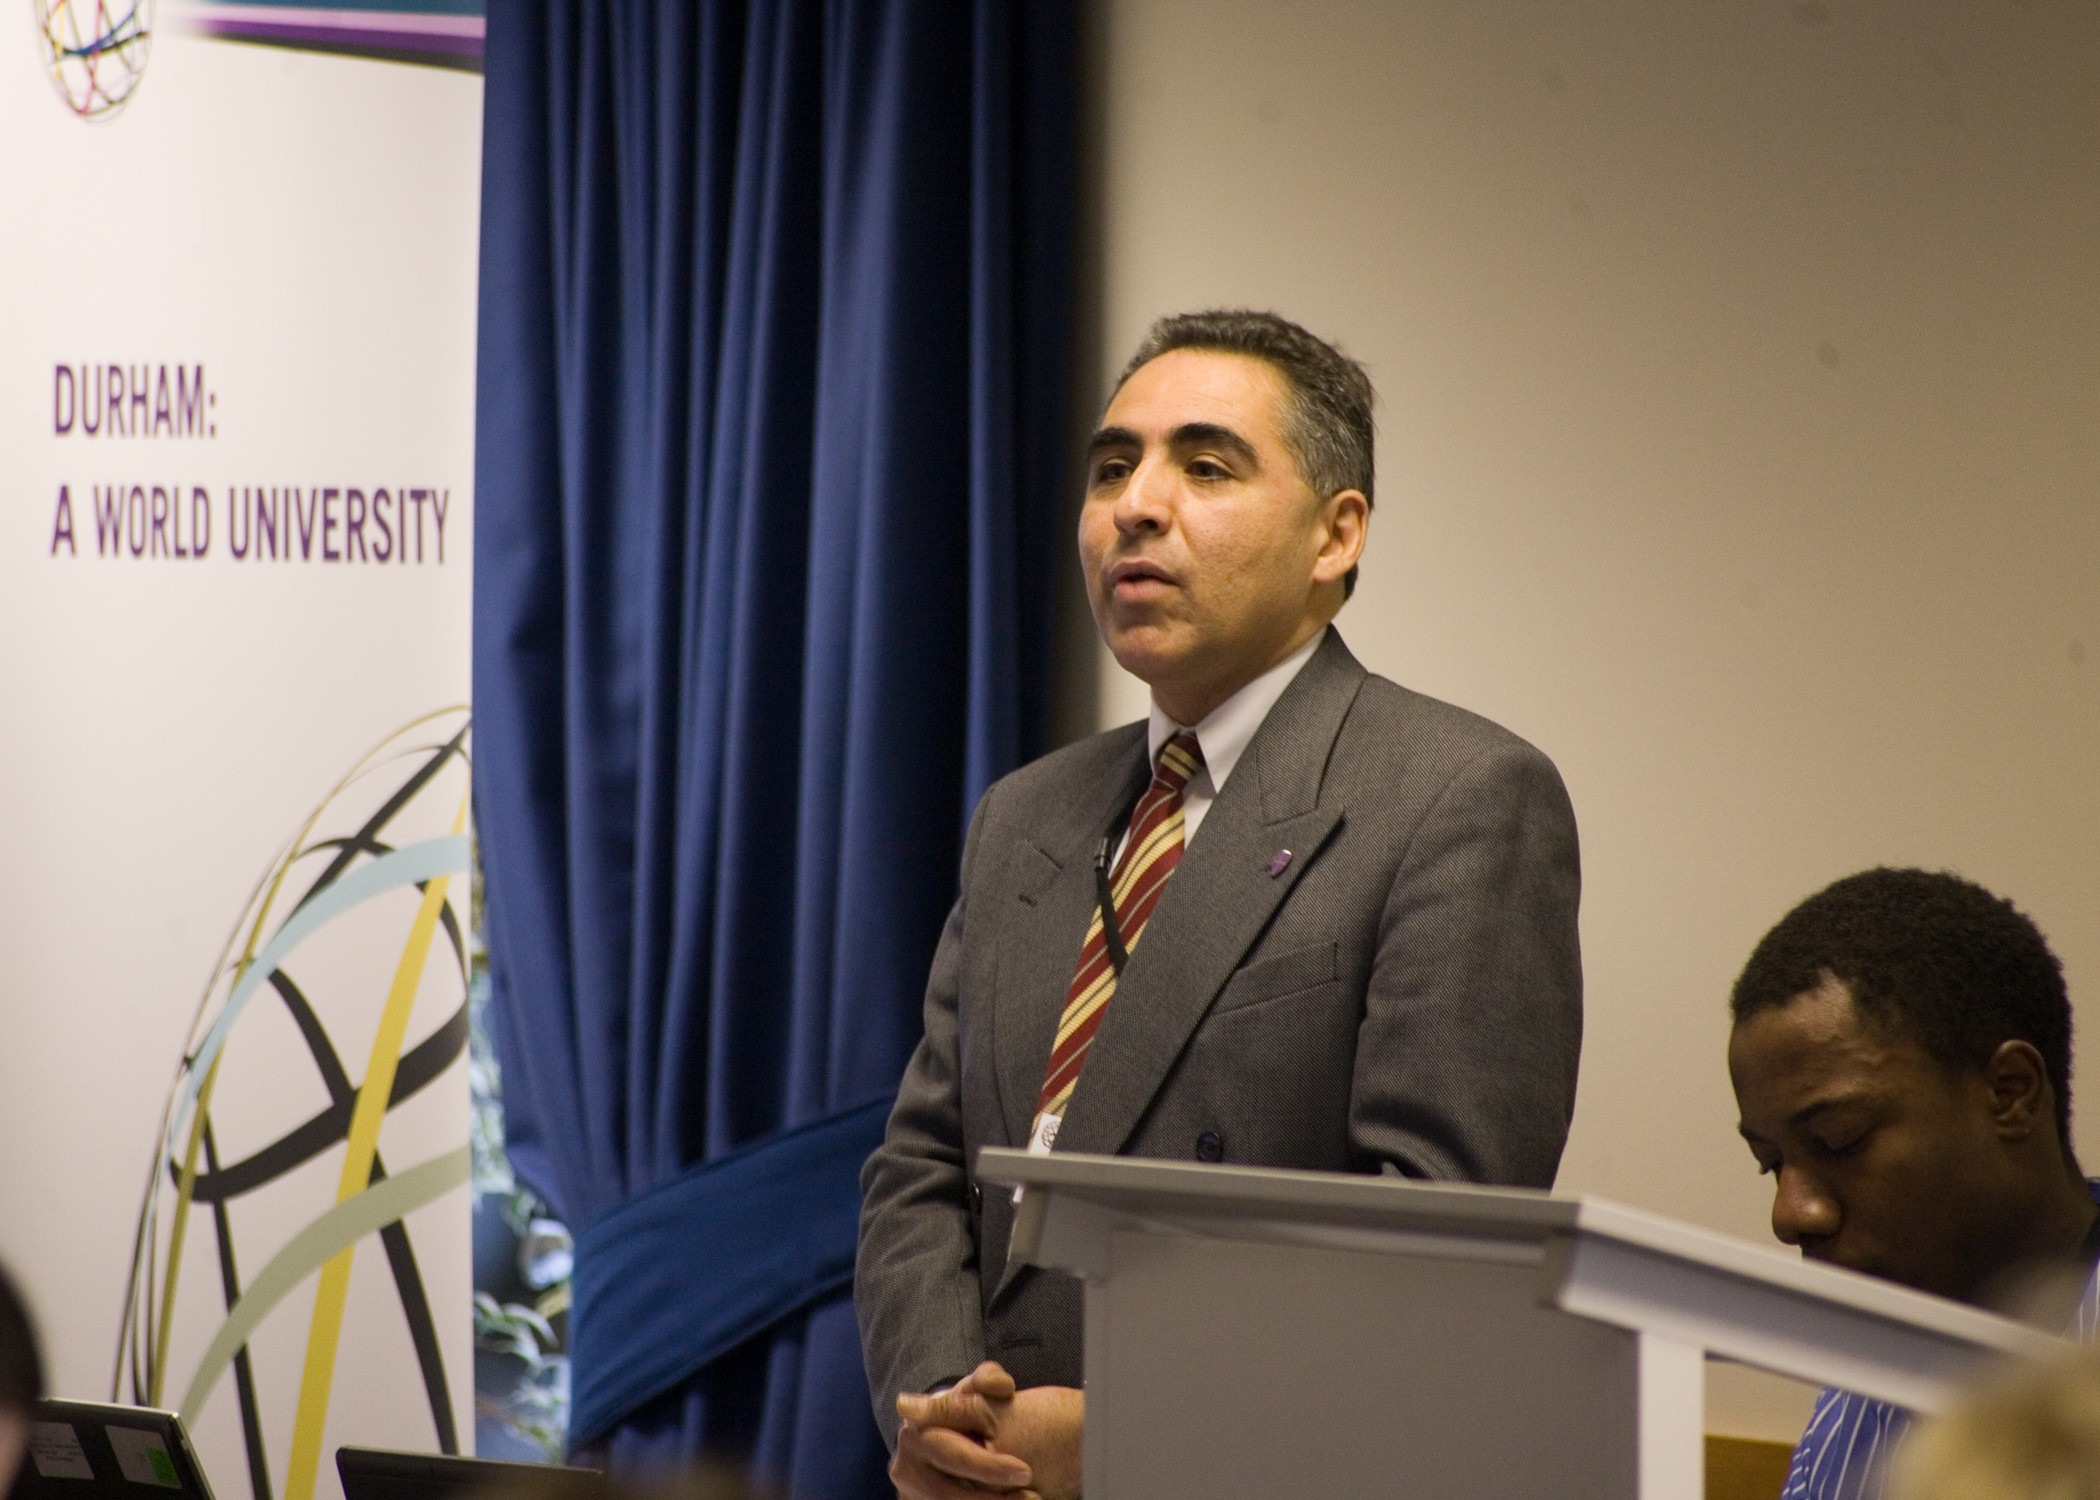 Professor Anoush Ehteshami presenting at a Durham University event